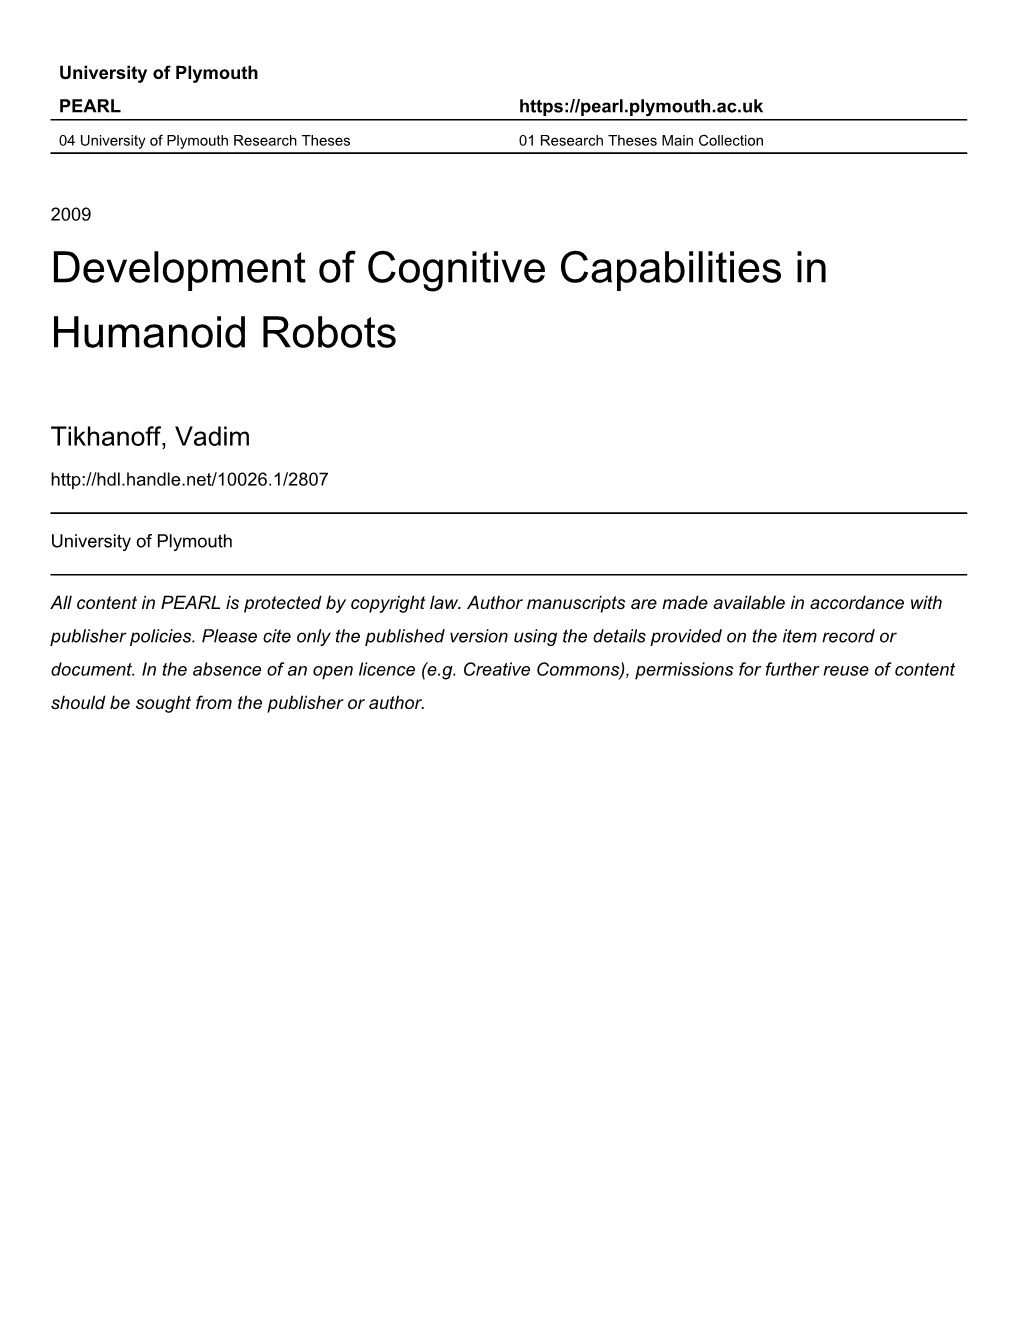 Cognitive Humanoid Robot: the Icub Simulator